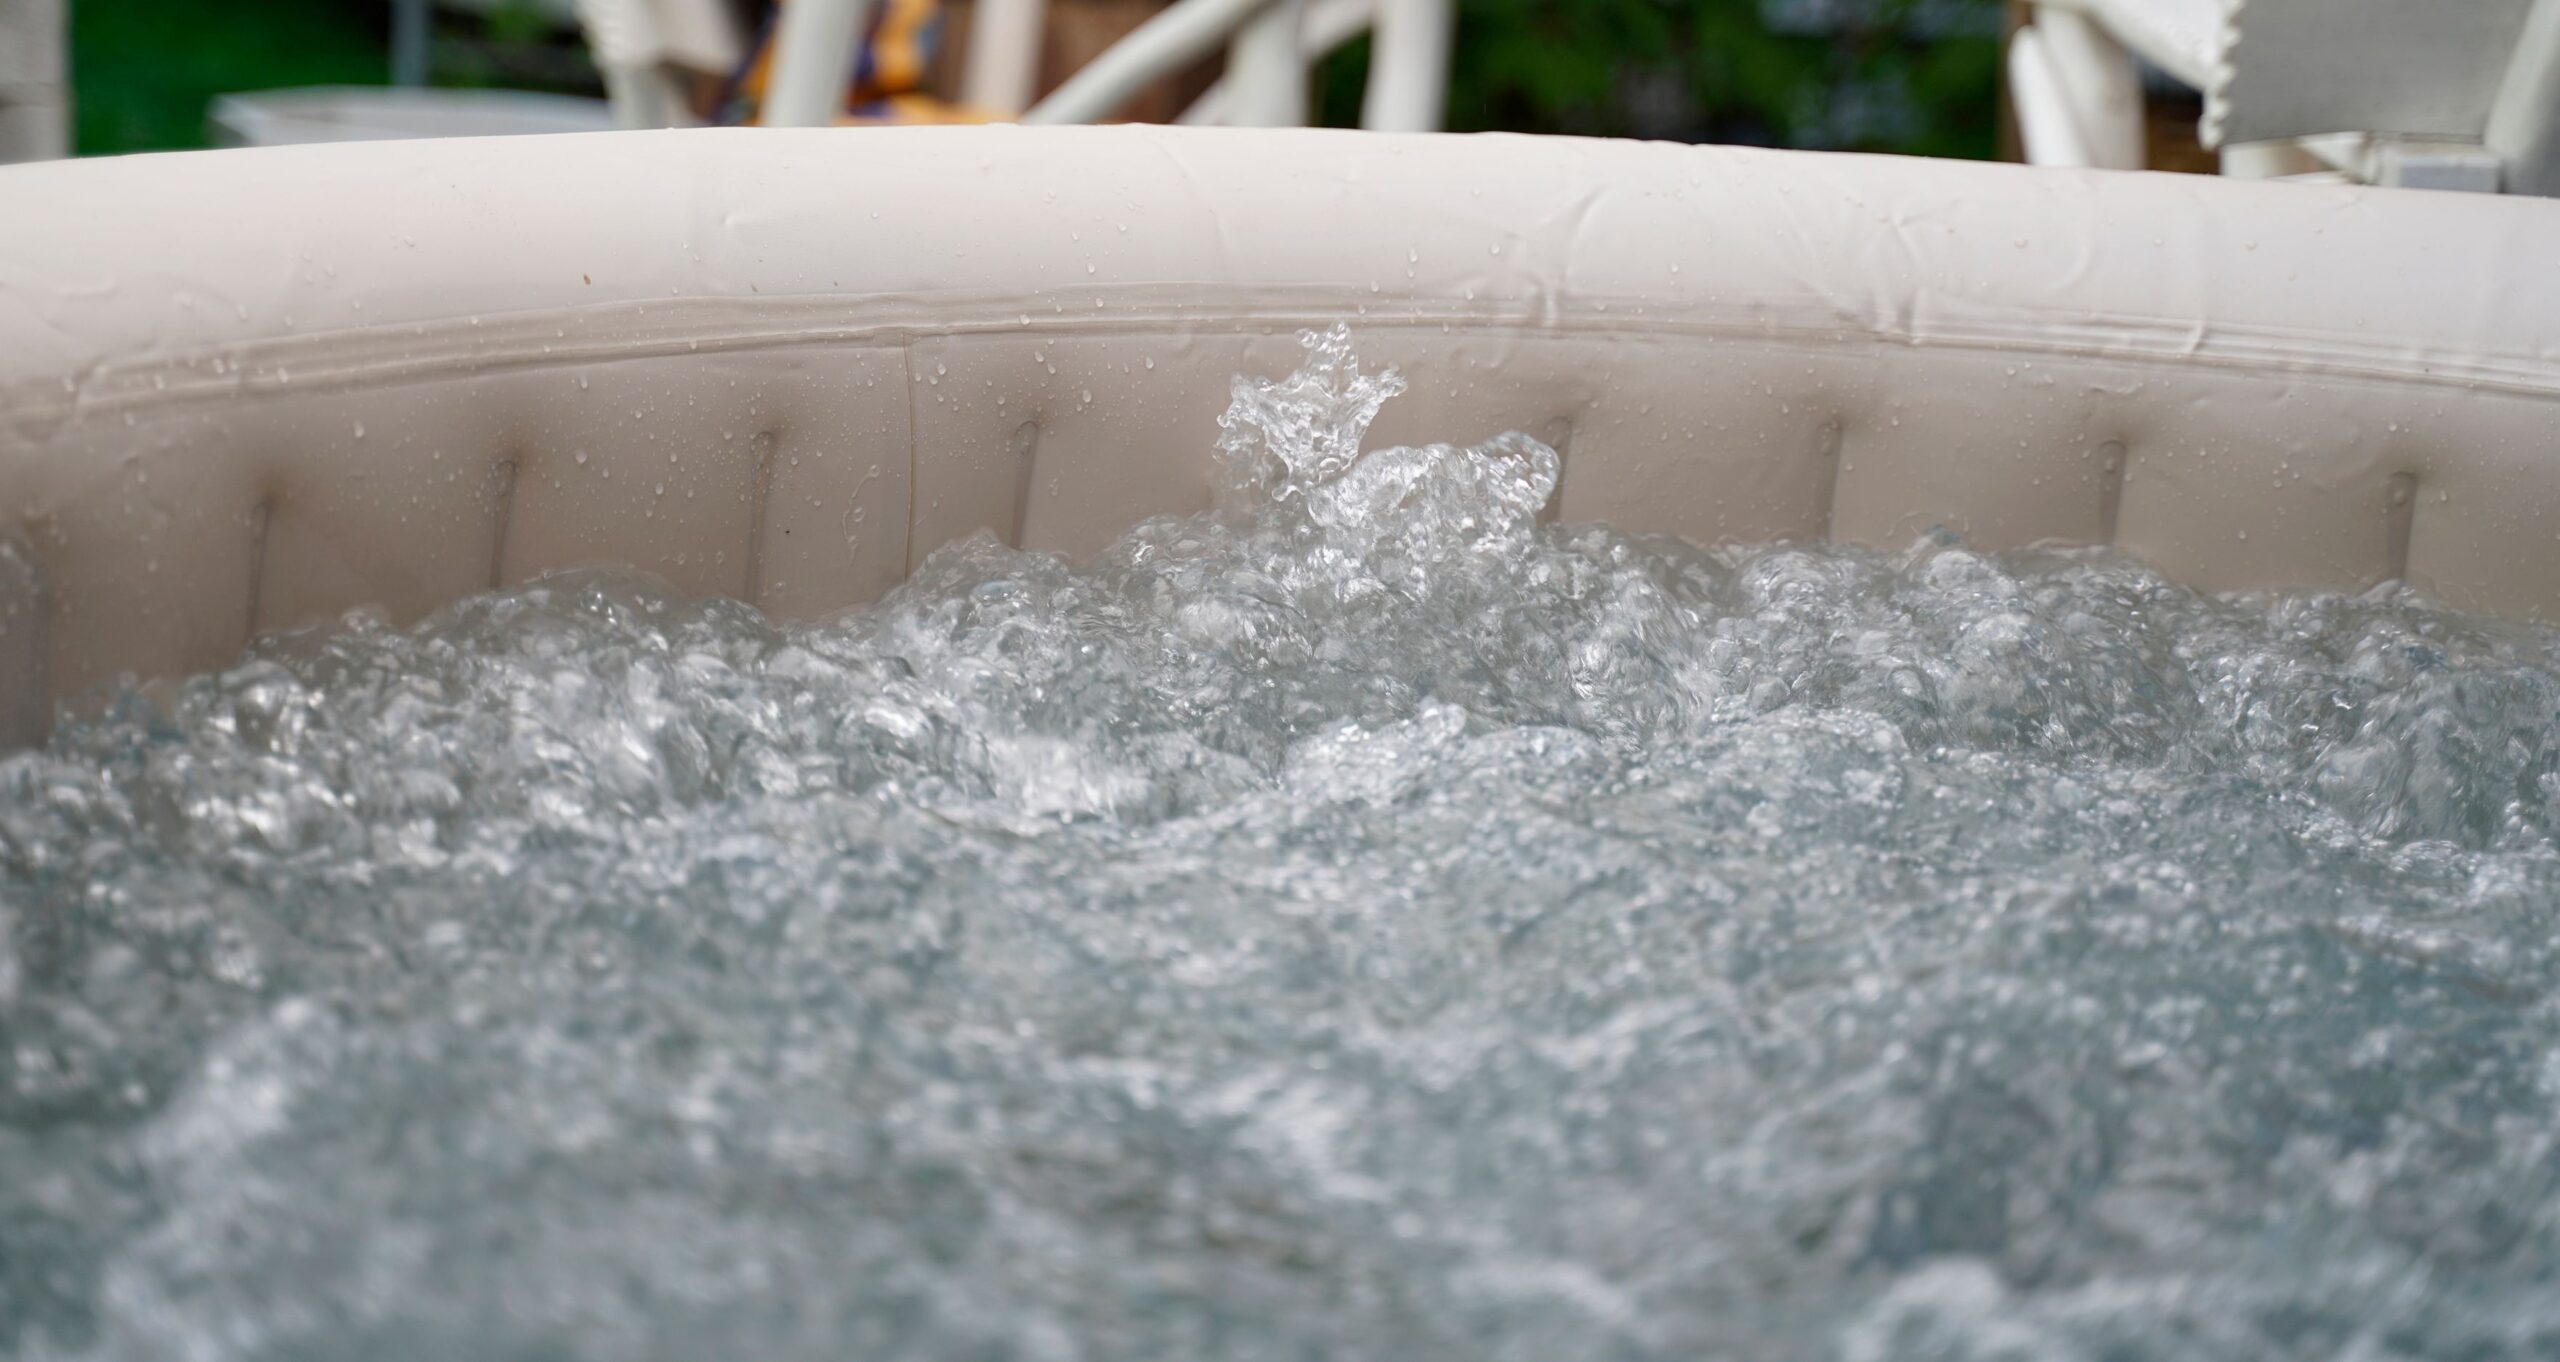 bubbling hot tub